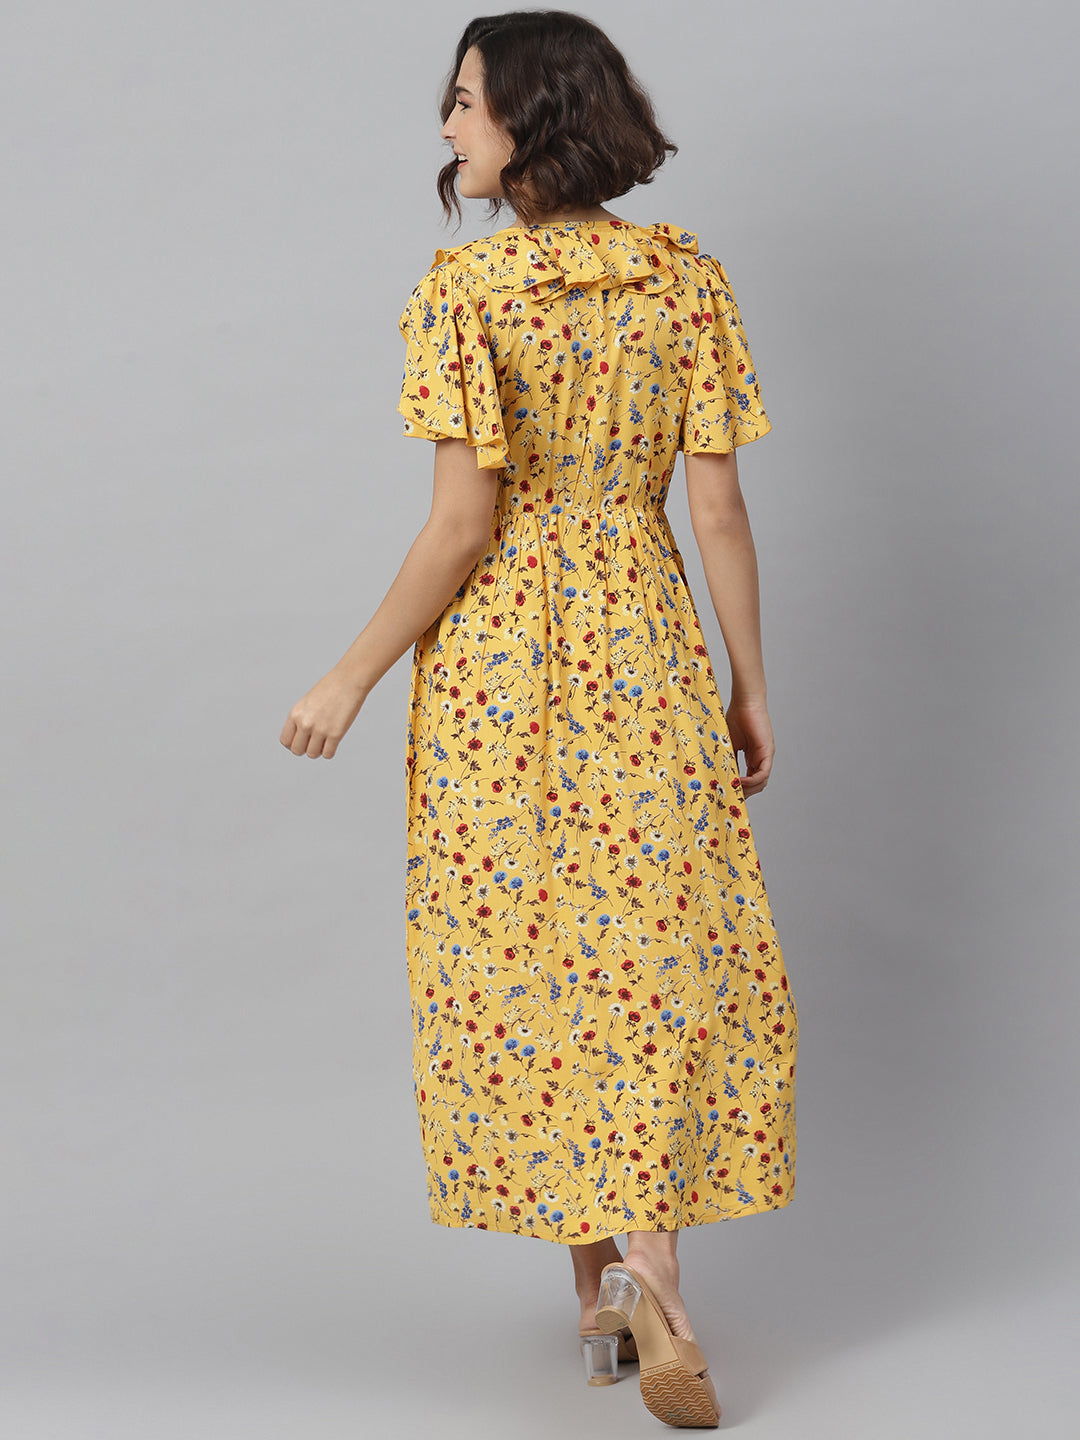 Women's Yellow Floral Maxi Dress